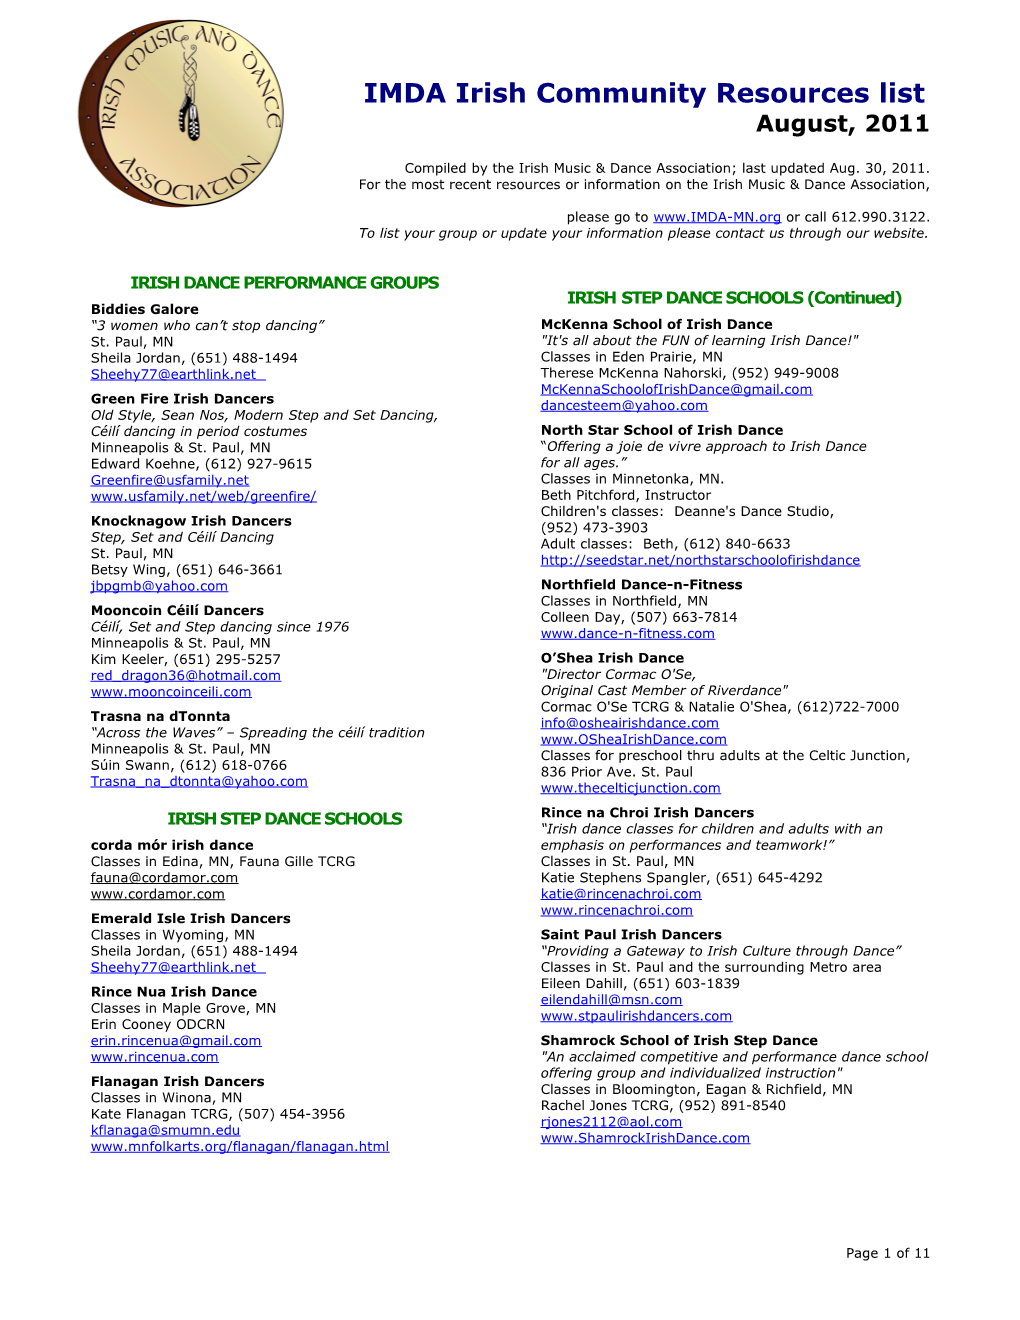 2002 IMDA Resources List